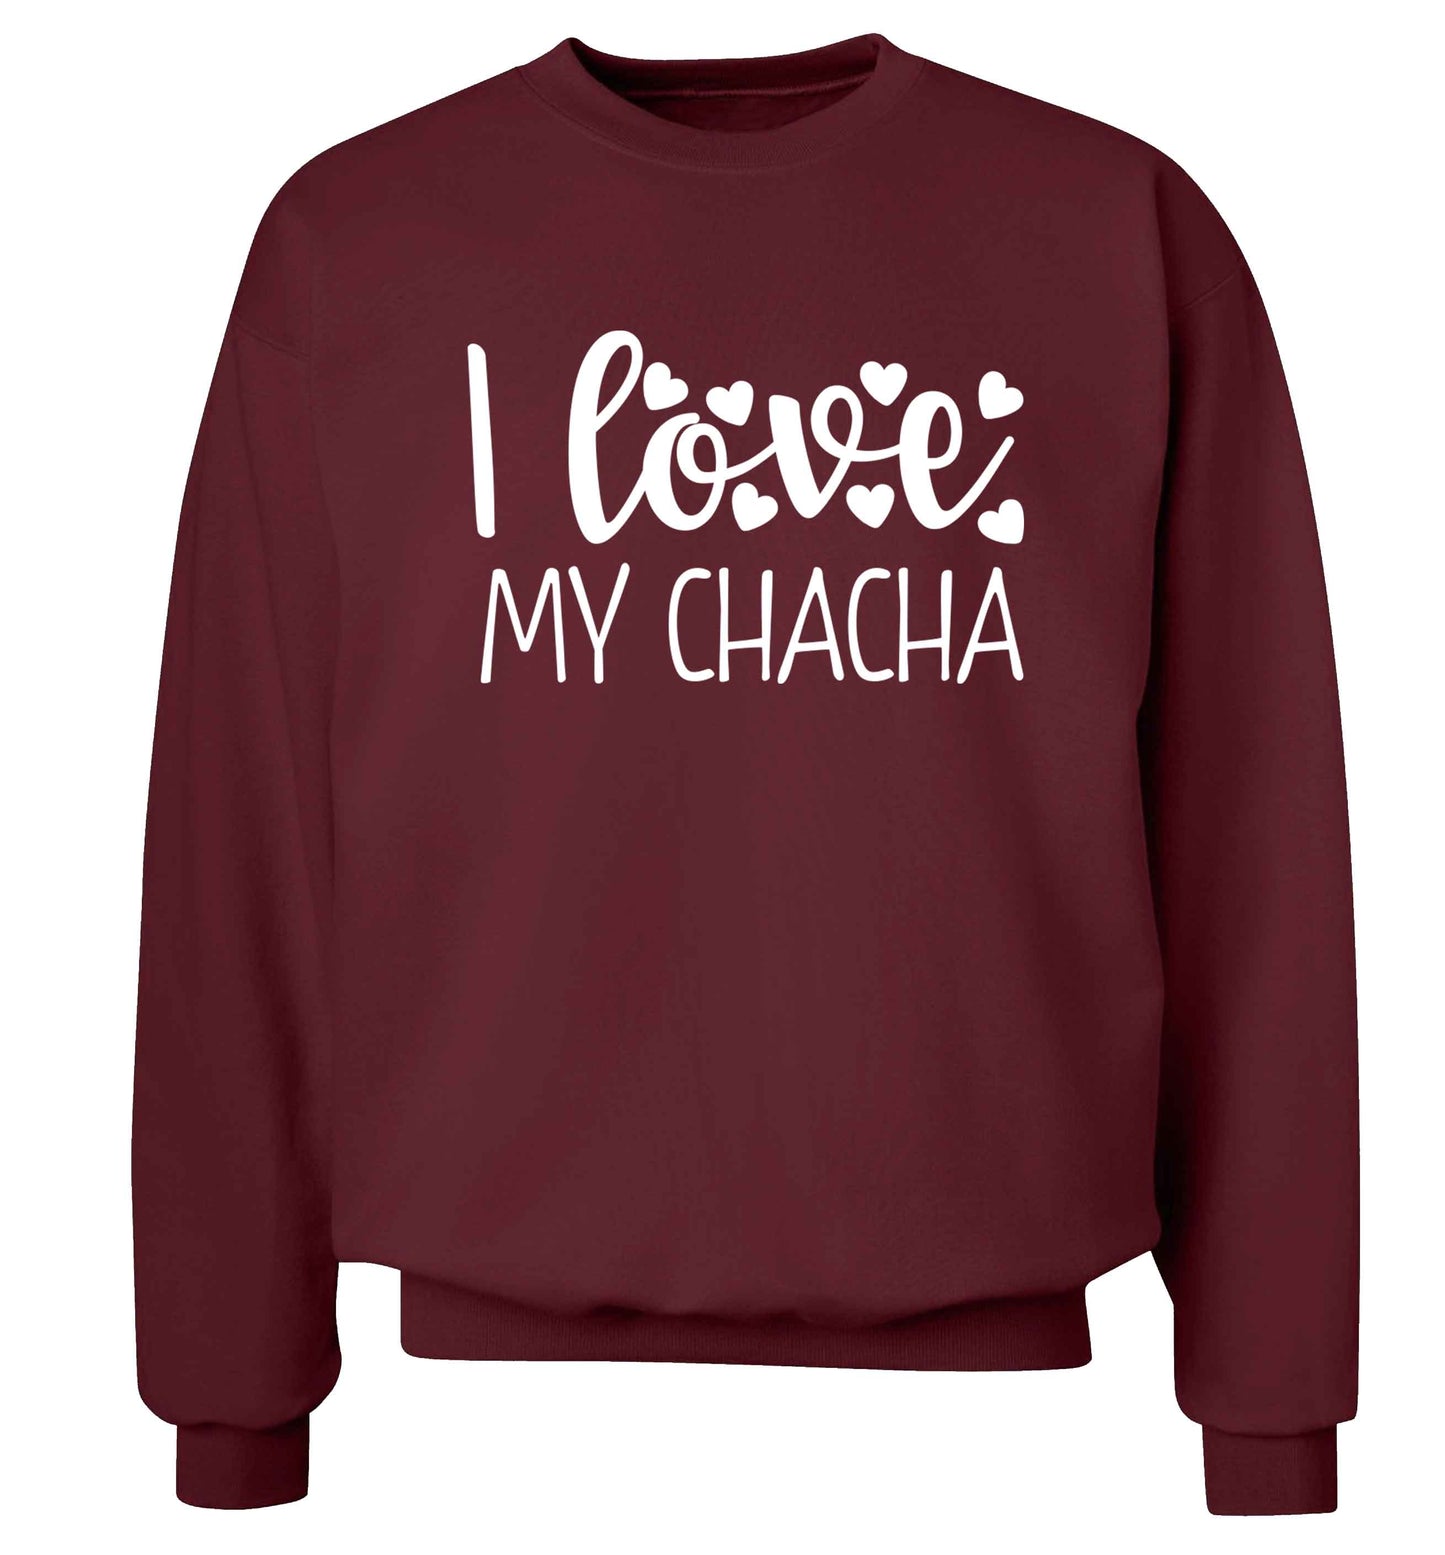 I love my chacha Adult's unisex maroon Sweater 2XL